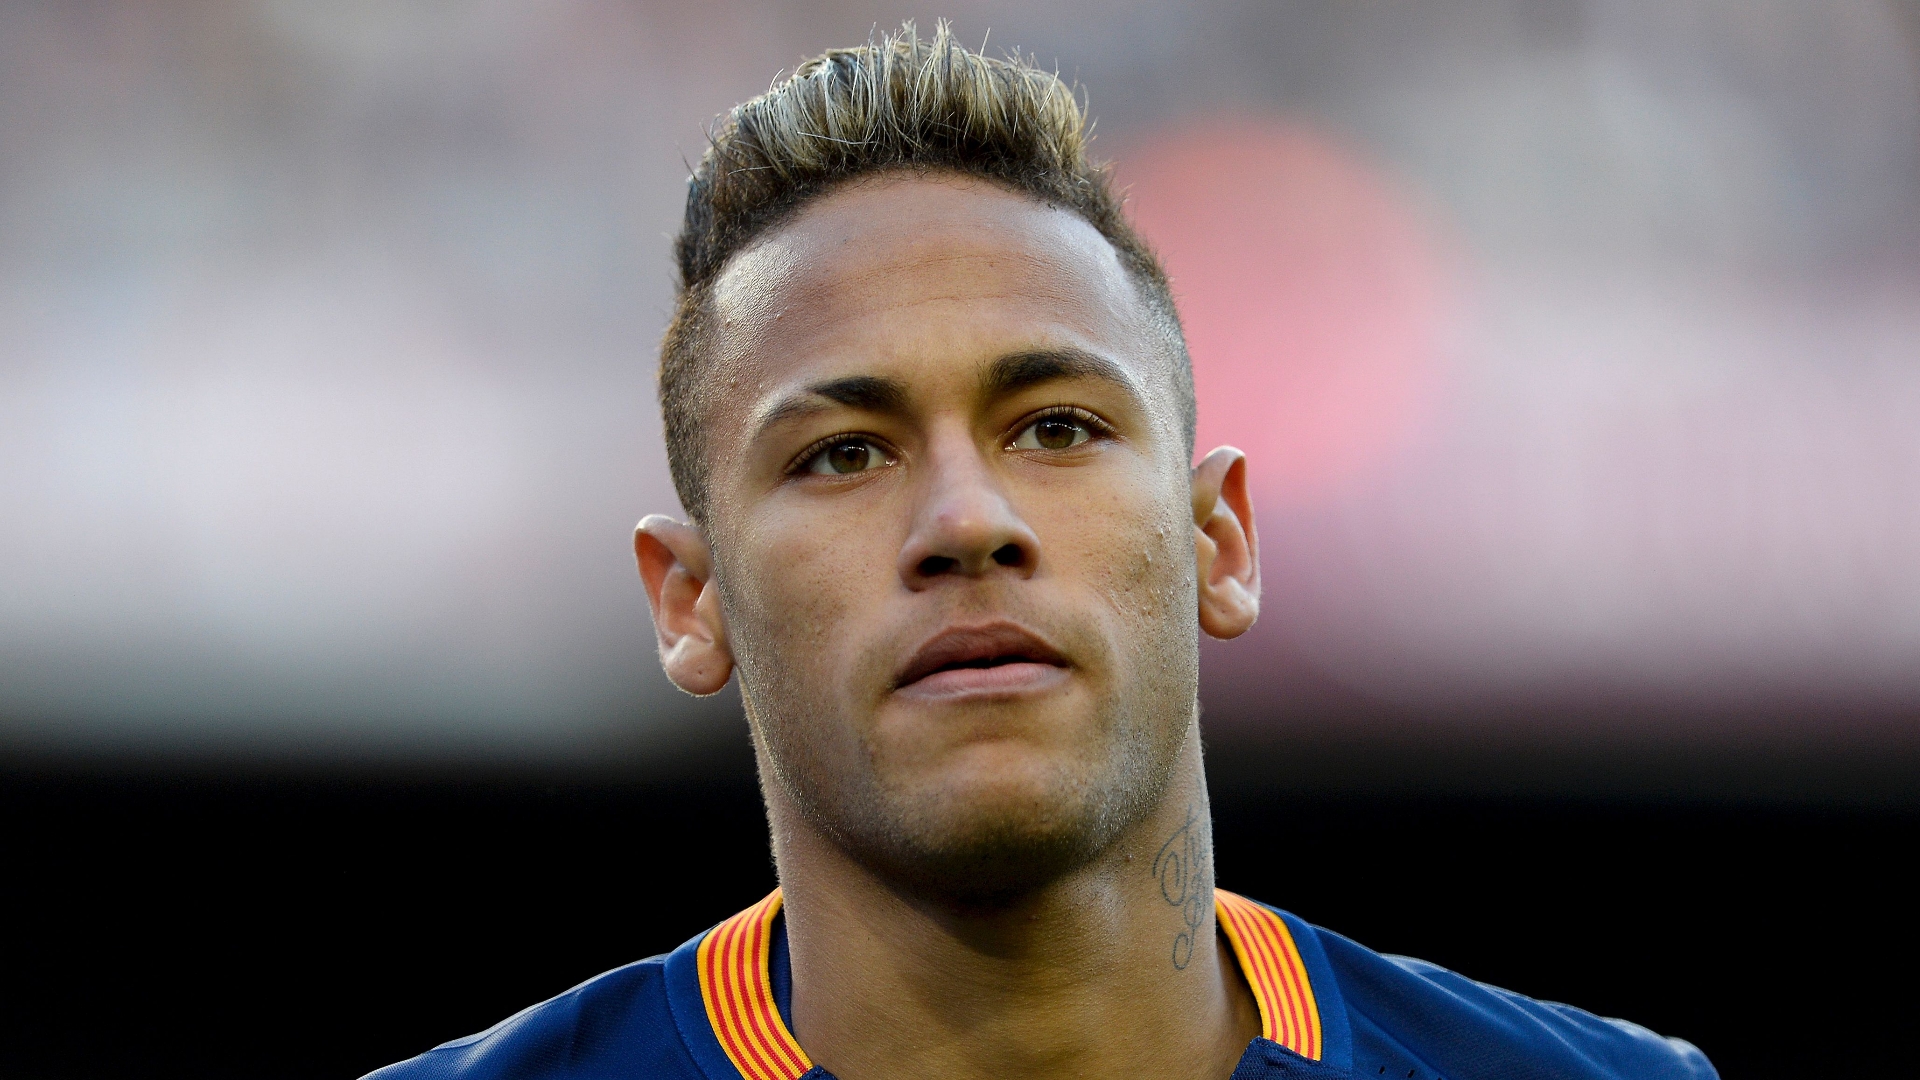 Neymar Football Soccer Player Free Hd Mobile Desktop Bakground Download Wallpaper Images